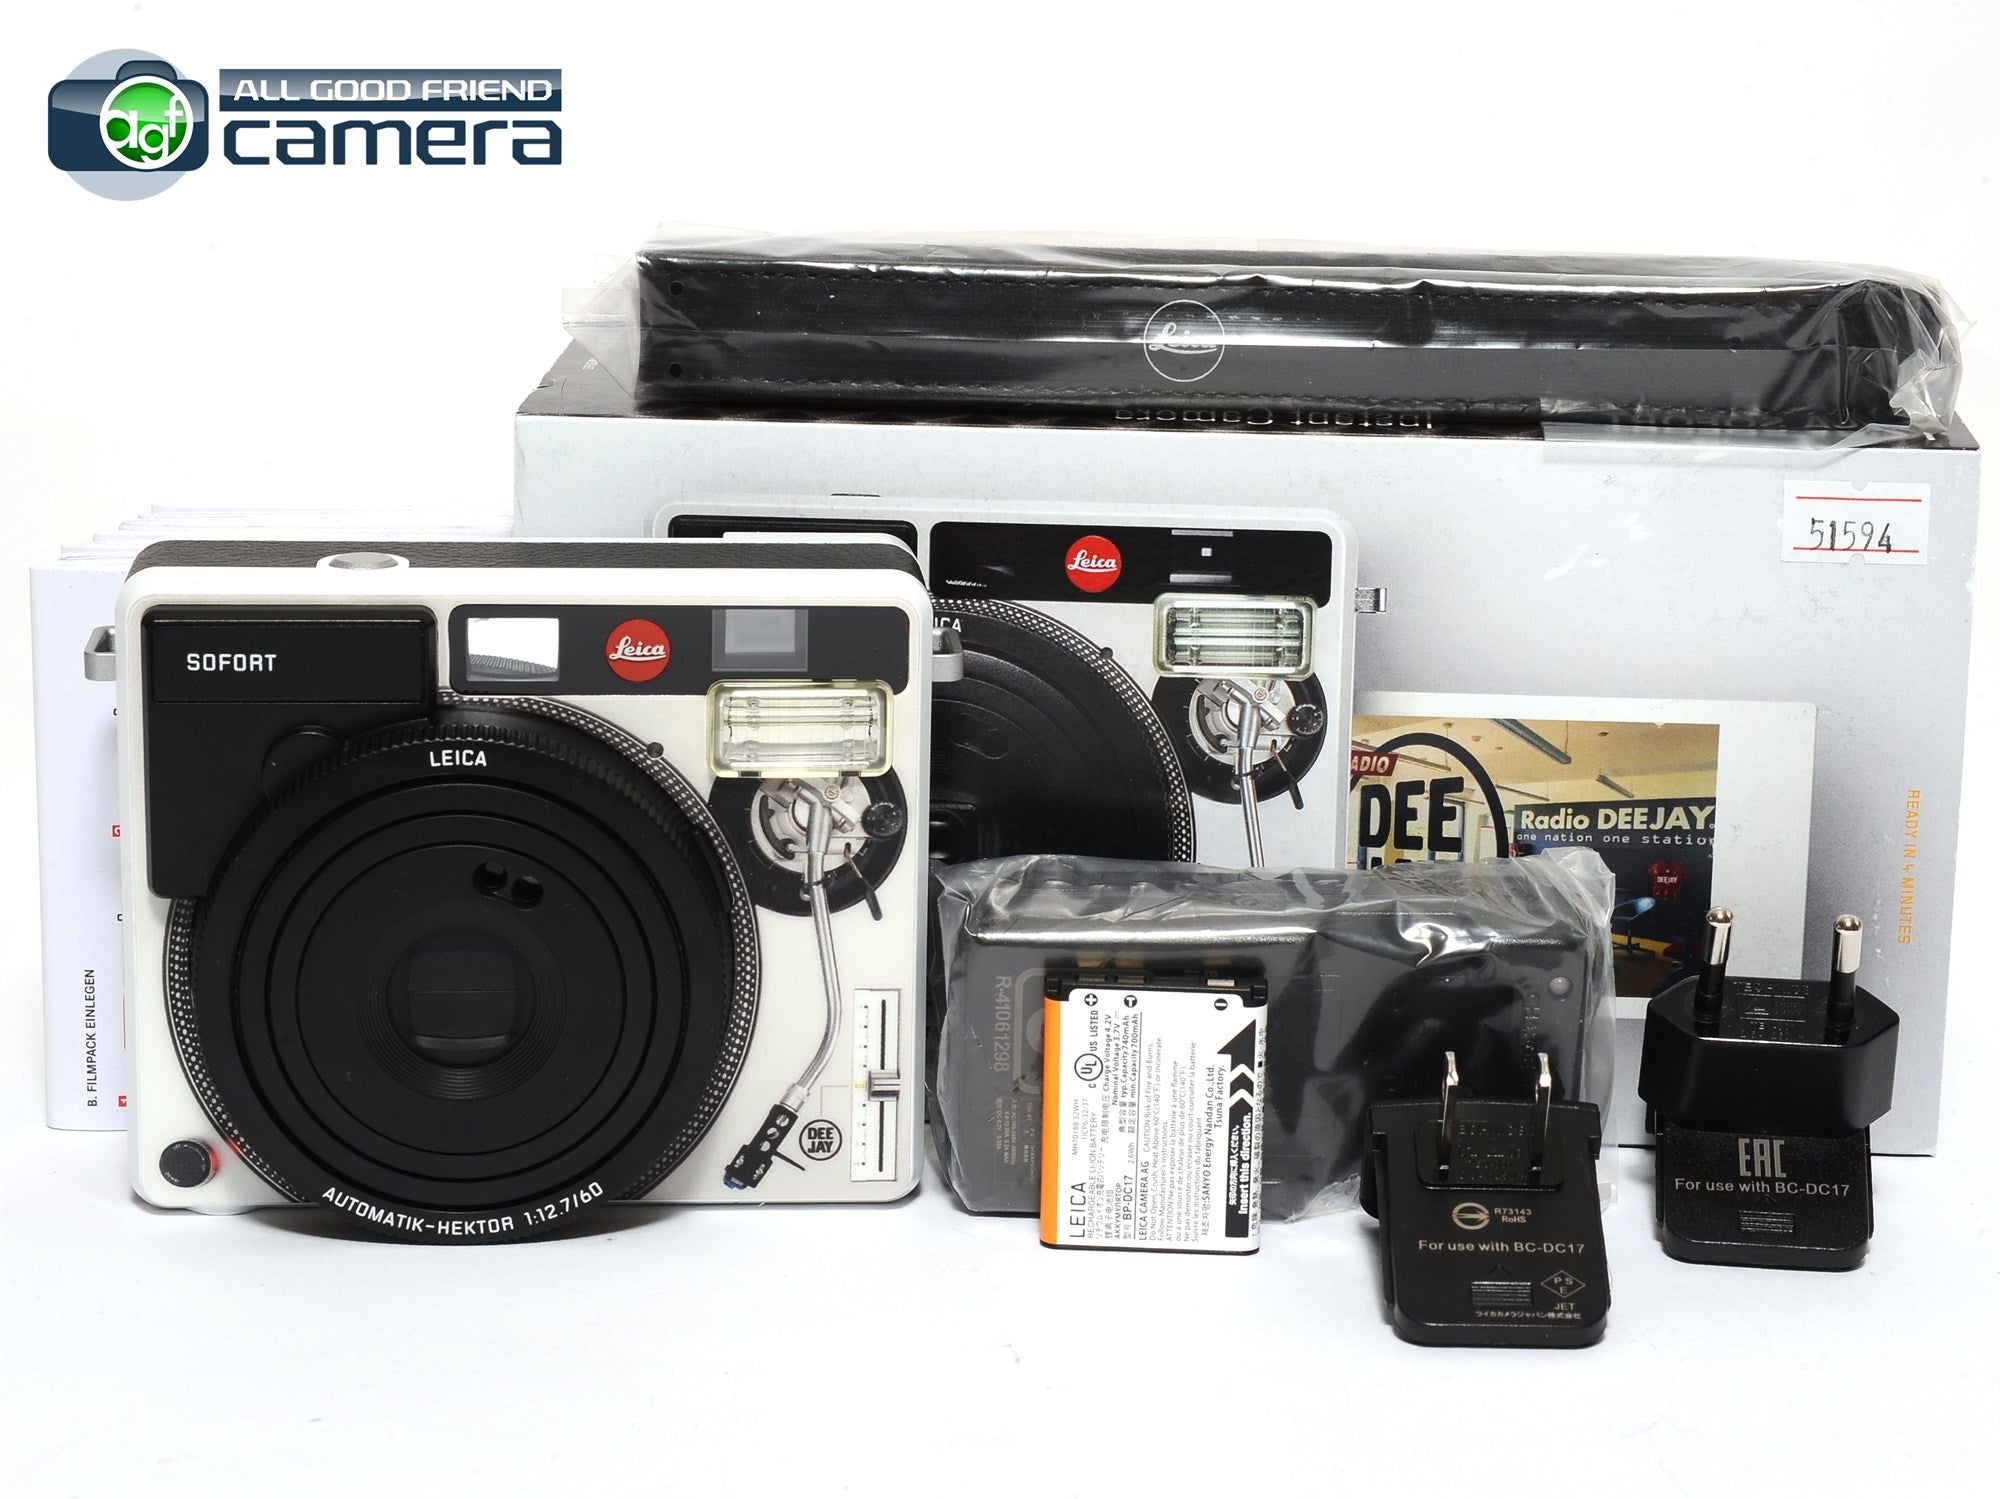 Leica-Sofort-Instant-Camera- Radio-DEEJAY -Edition-19114-*BRAND